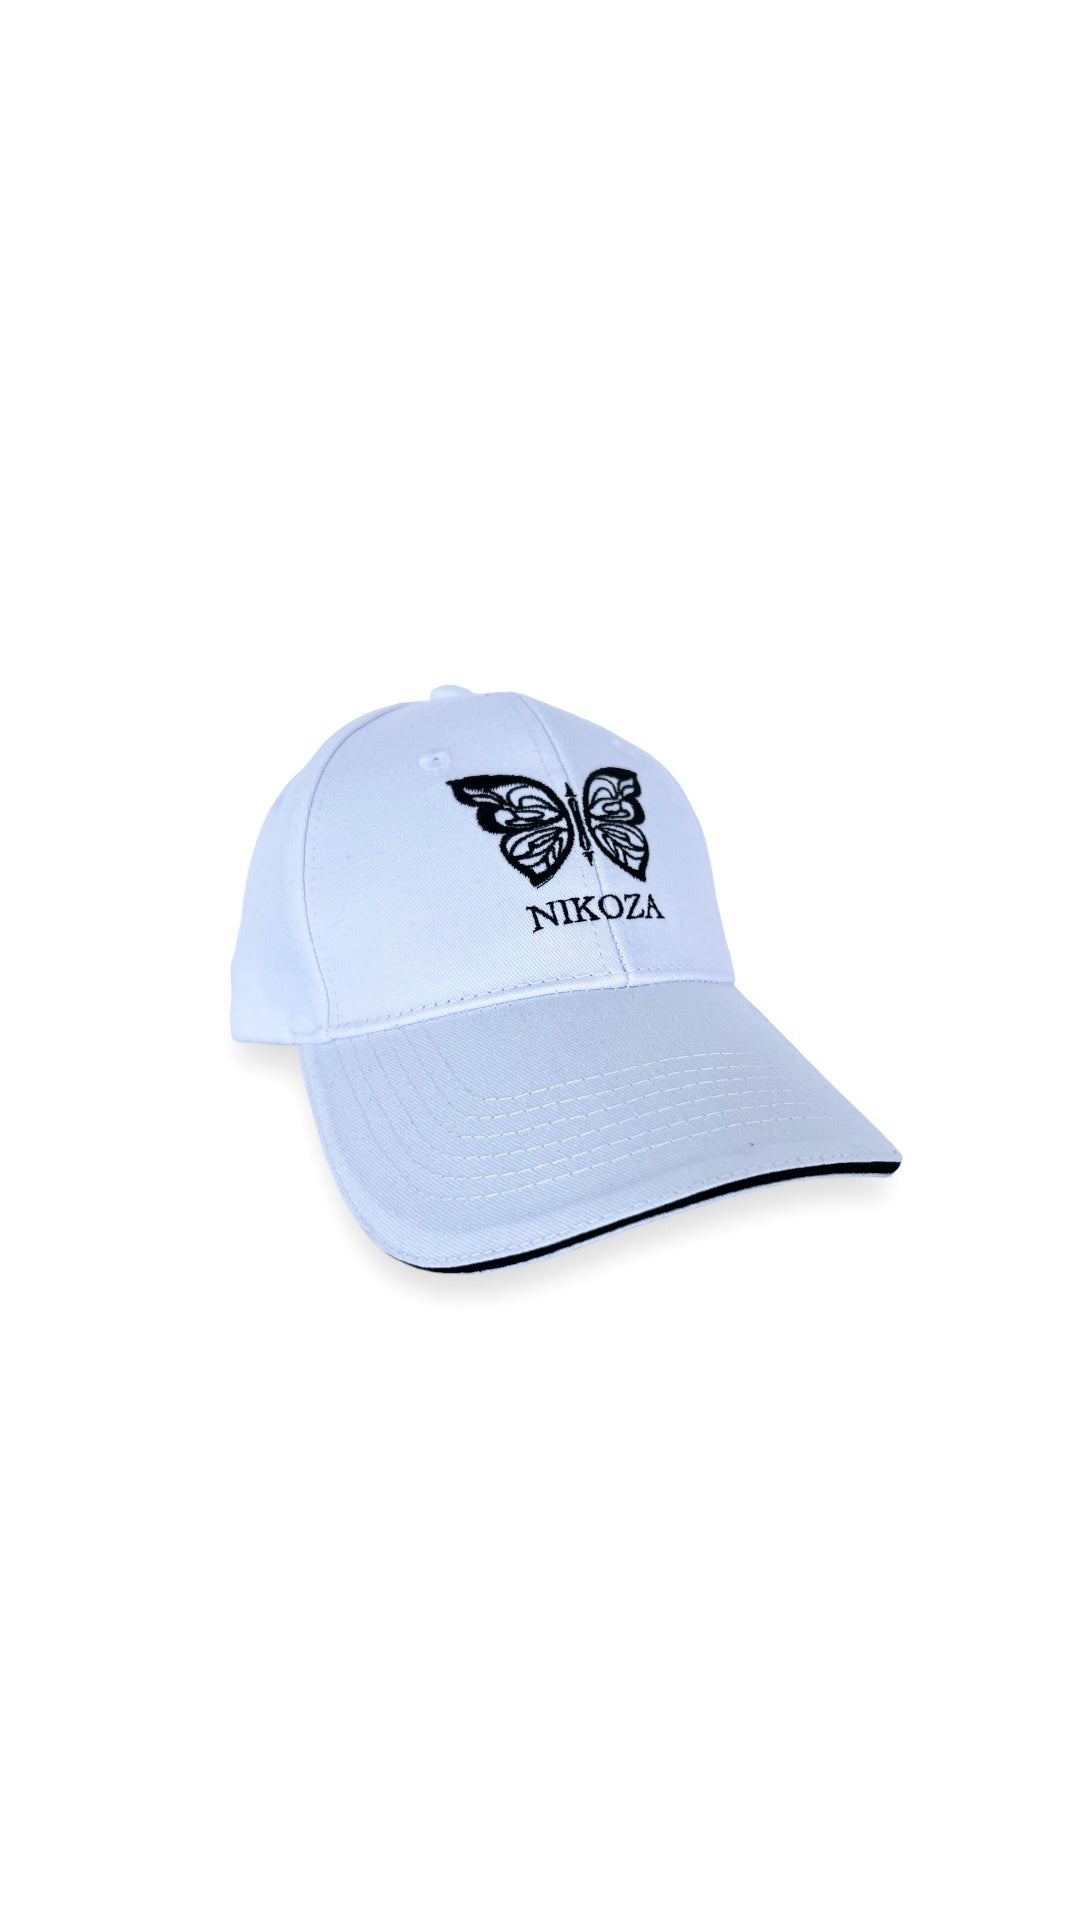 Hats Copy of White Nikoza baseball hat NIKOZA